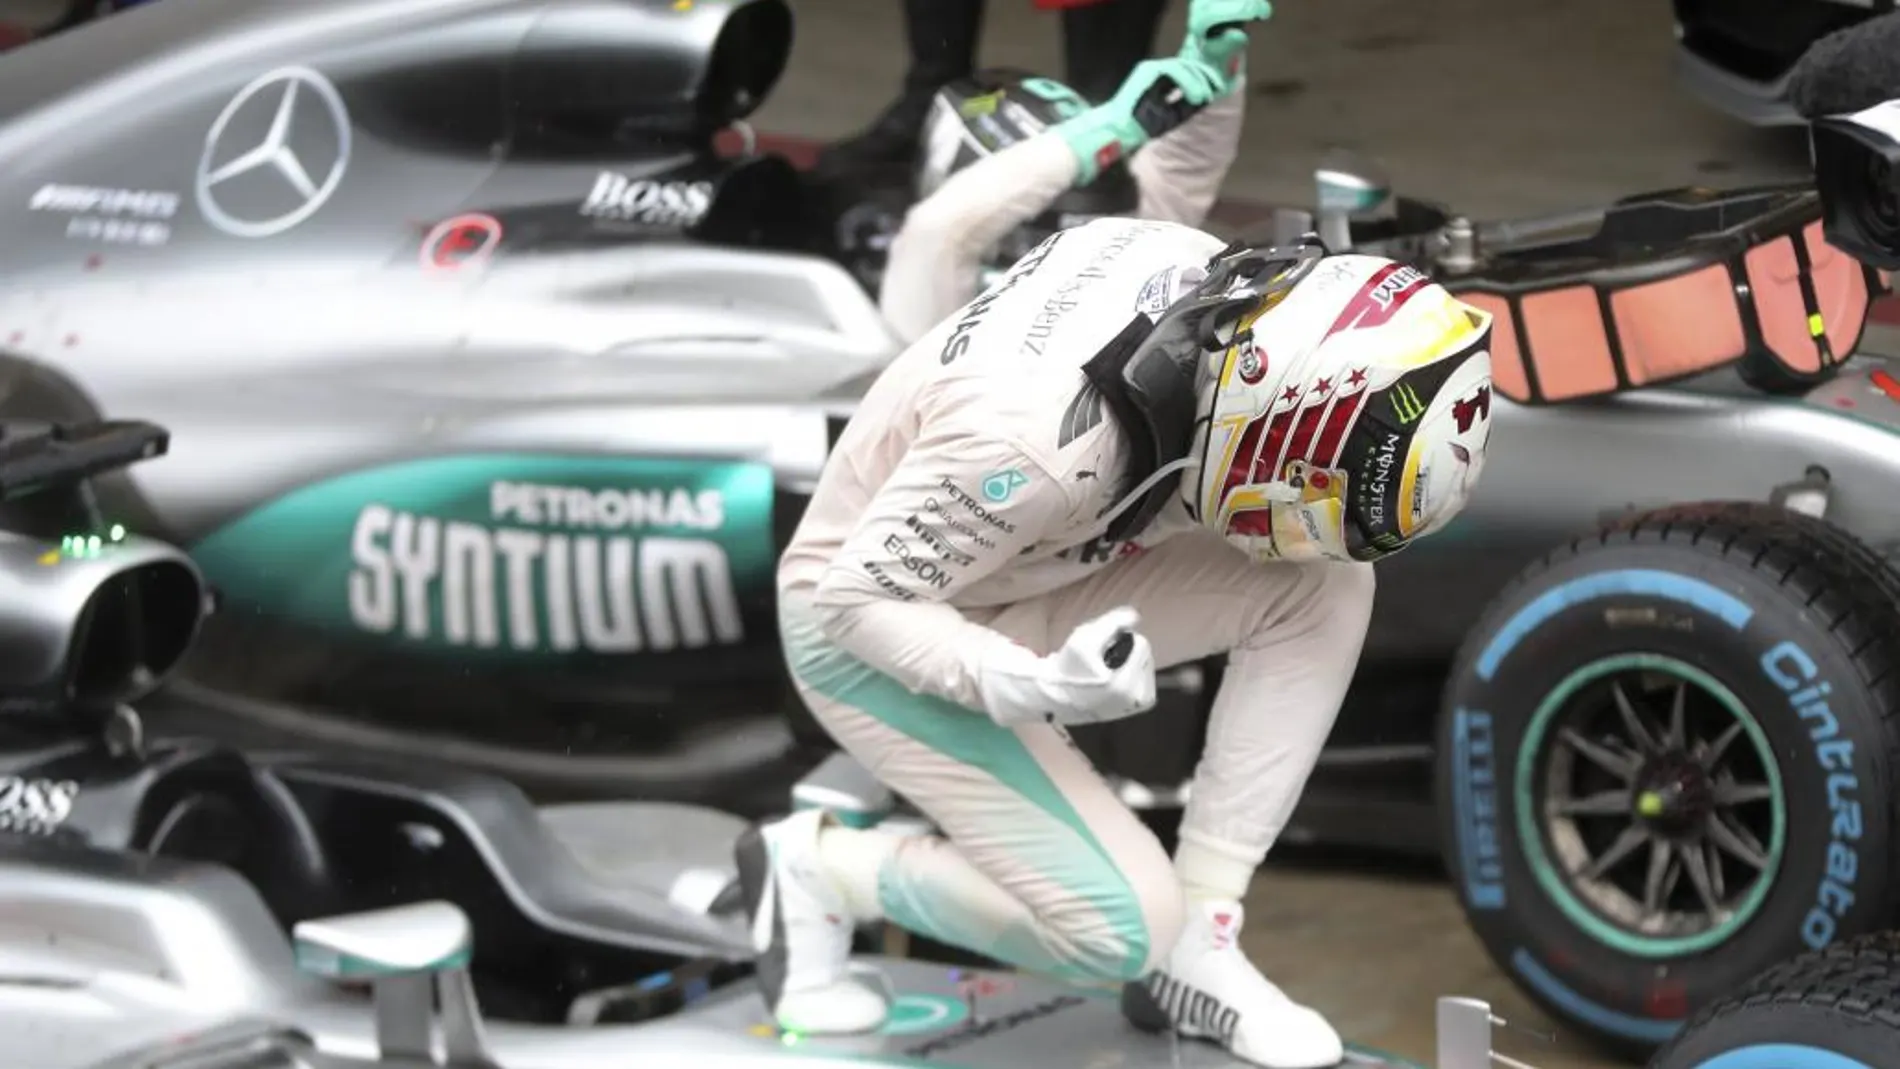 Hamilton celebrando la victoria del GP de Interlagos